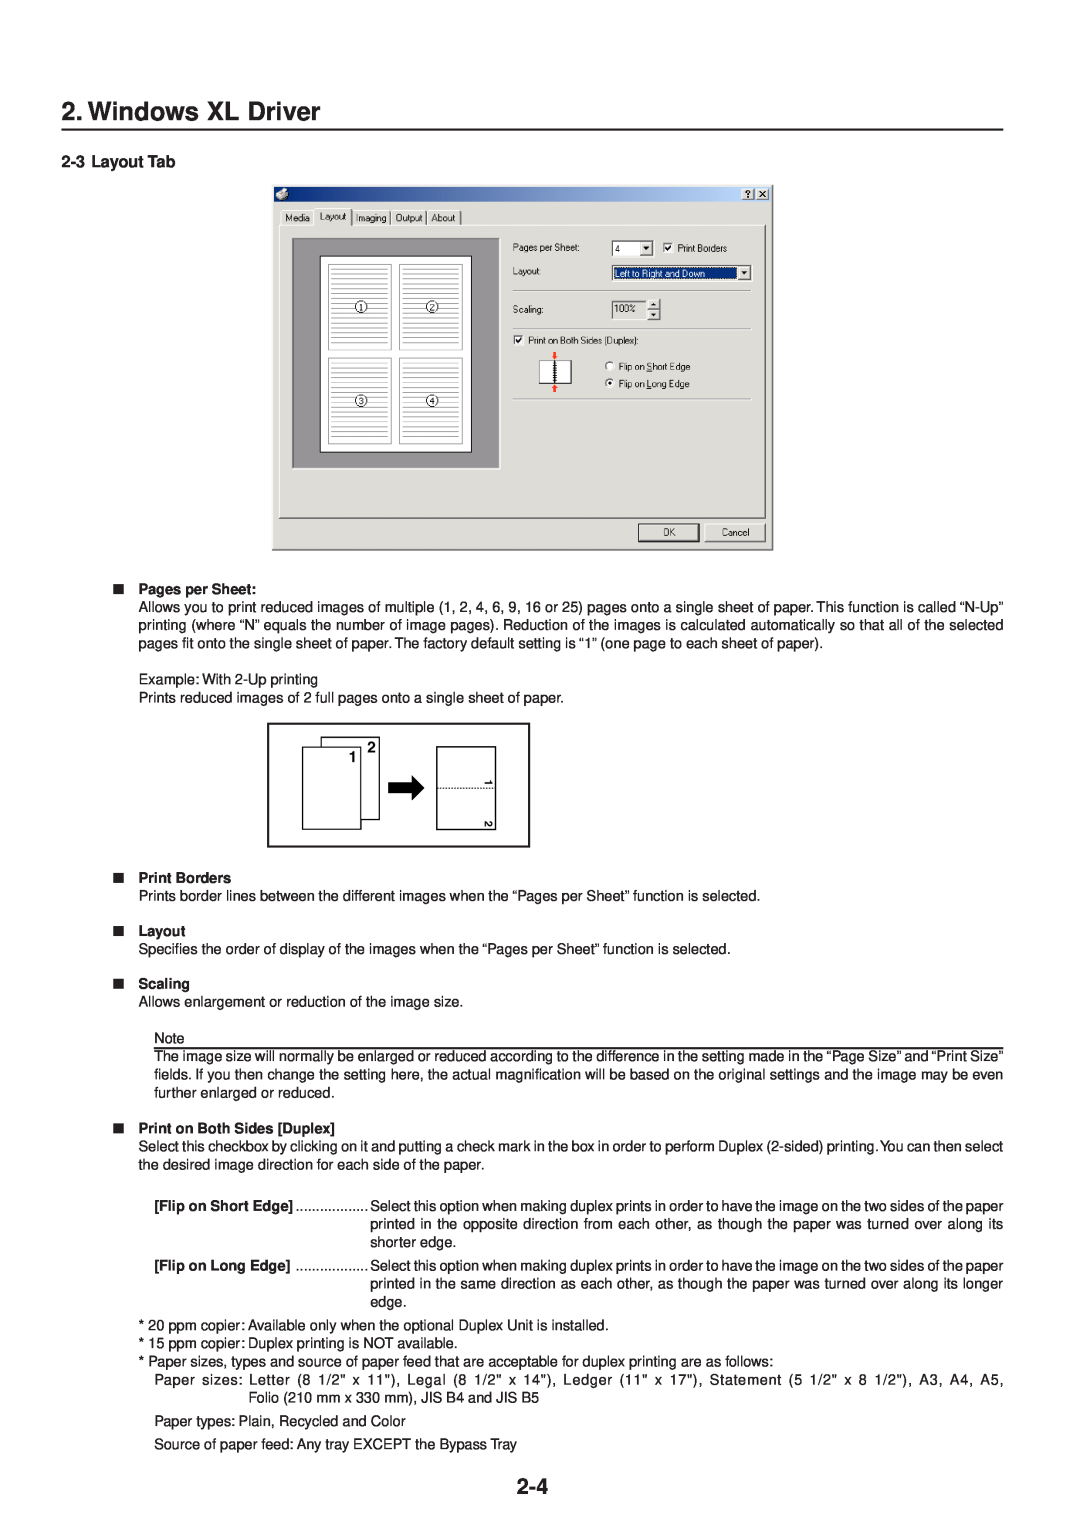 IBM Printing System Windows XL Driver, Layout Tab, Pages per Sheet, Print Borders, Scaling, Print on Both Sides Duplex 